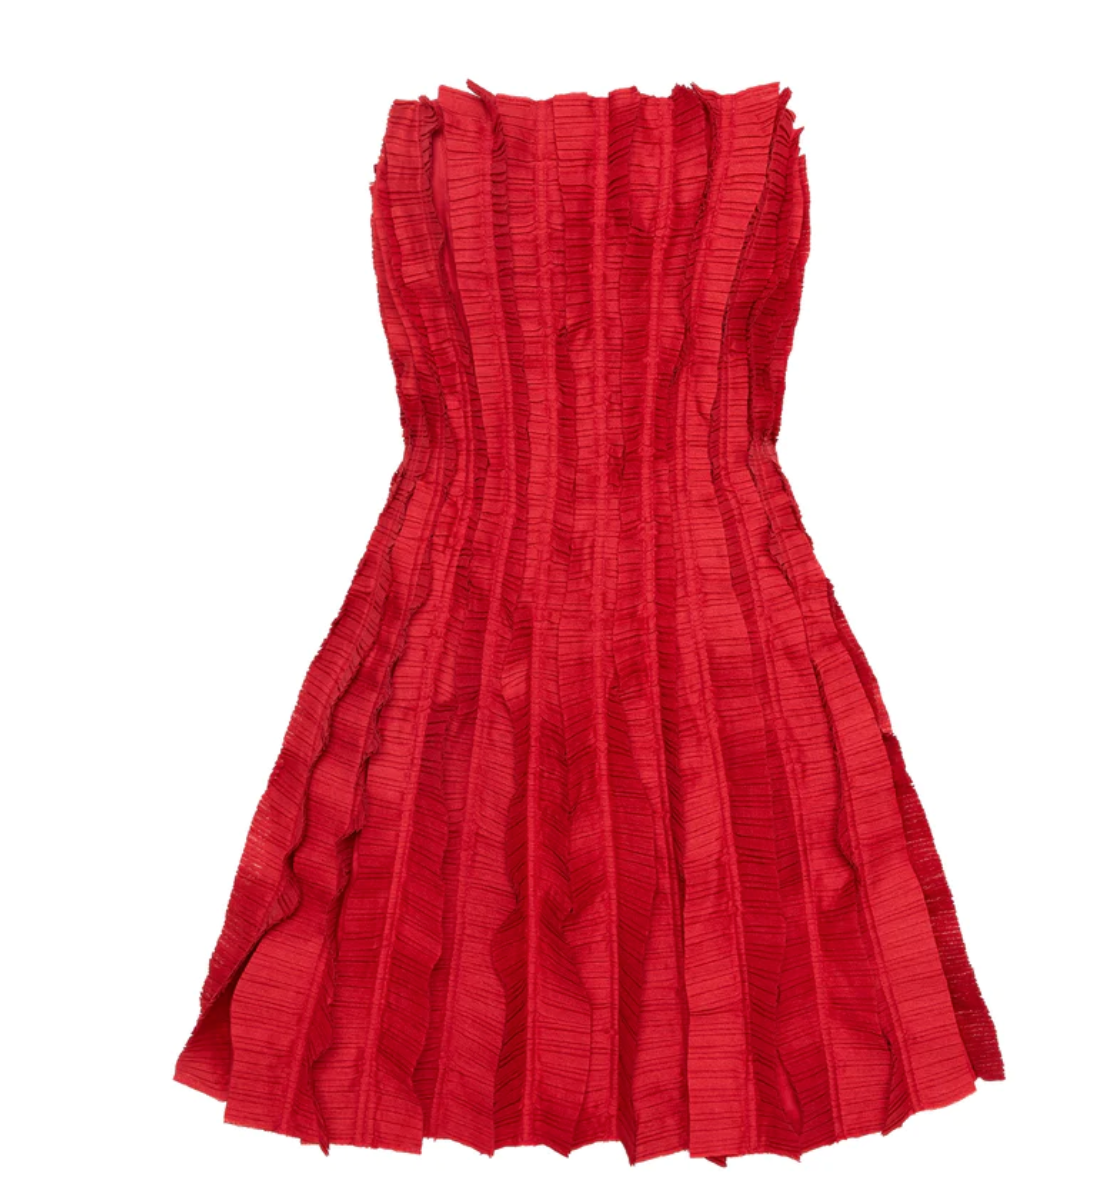 Aje Hybrid Sleeveless Mini Dress in Scarlet Red